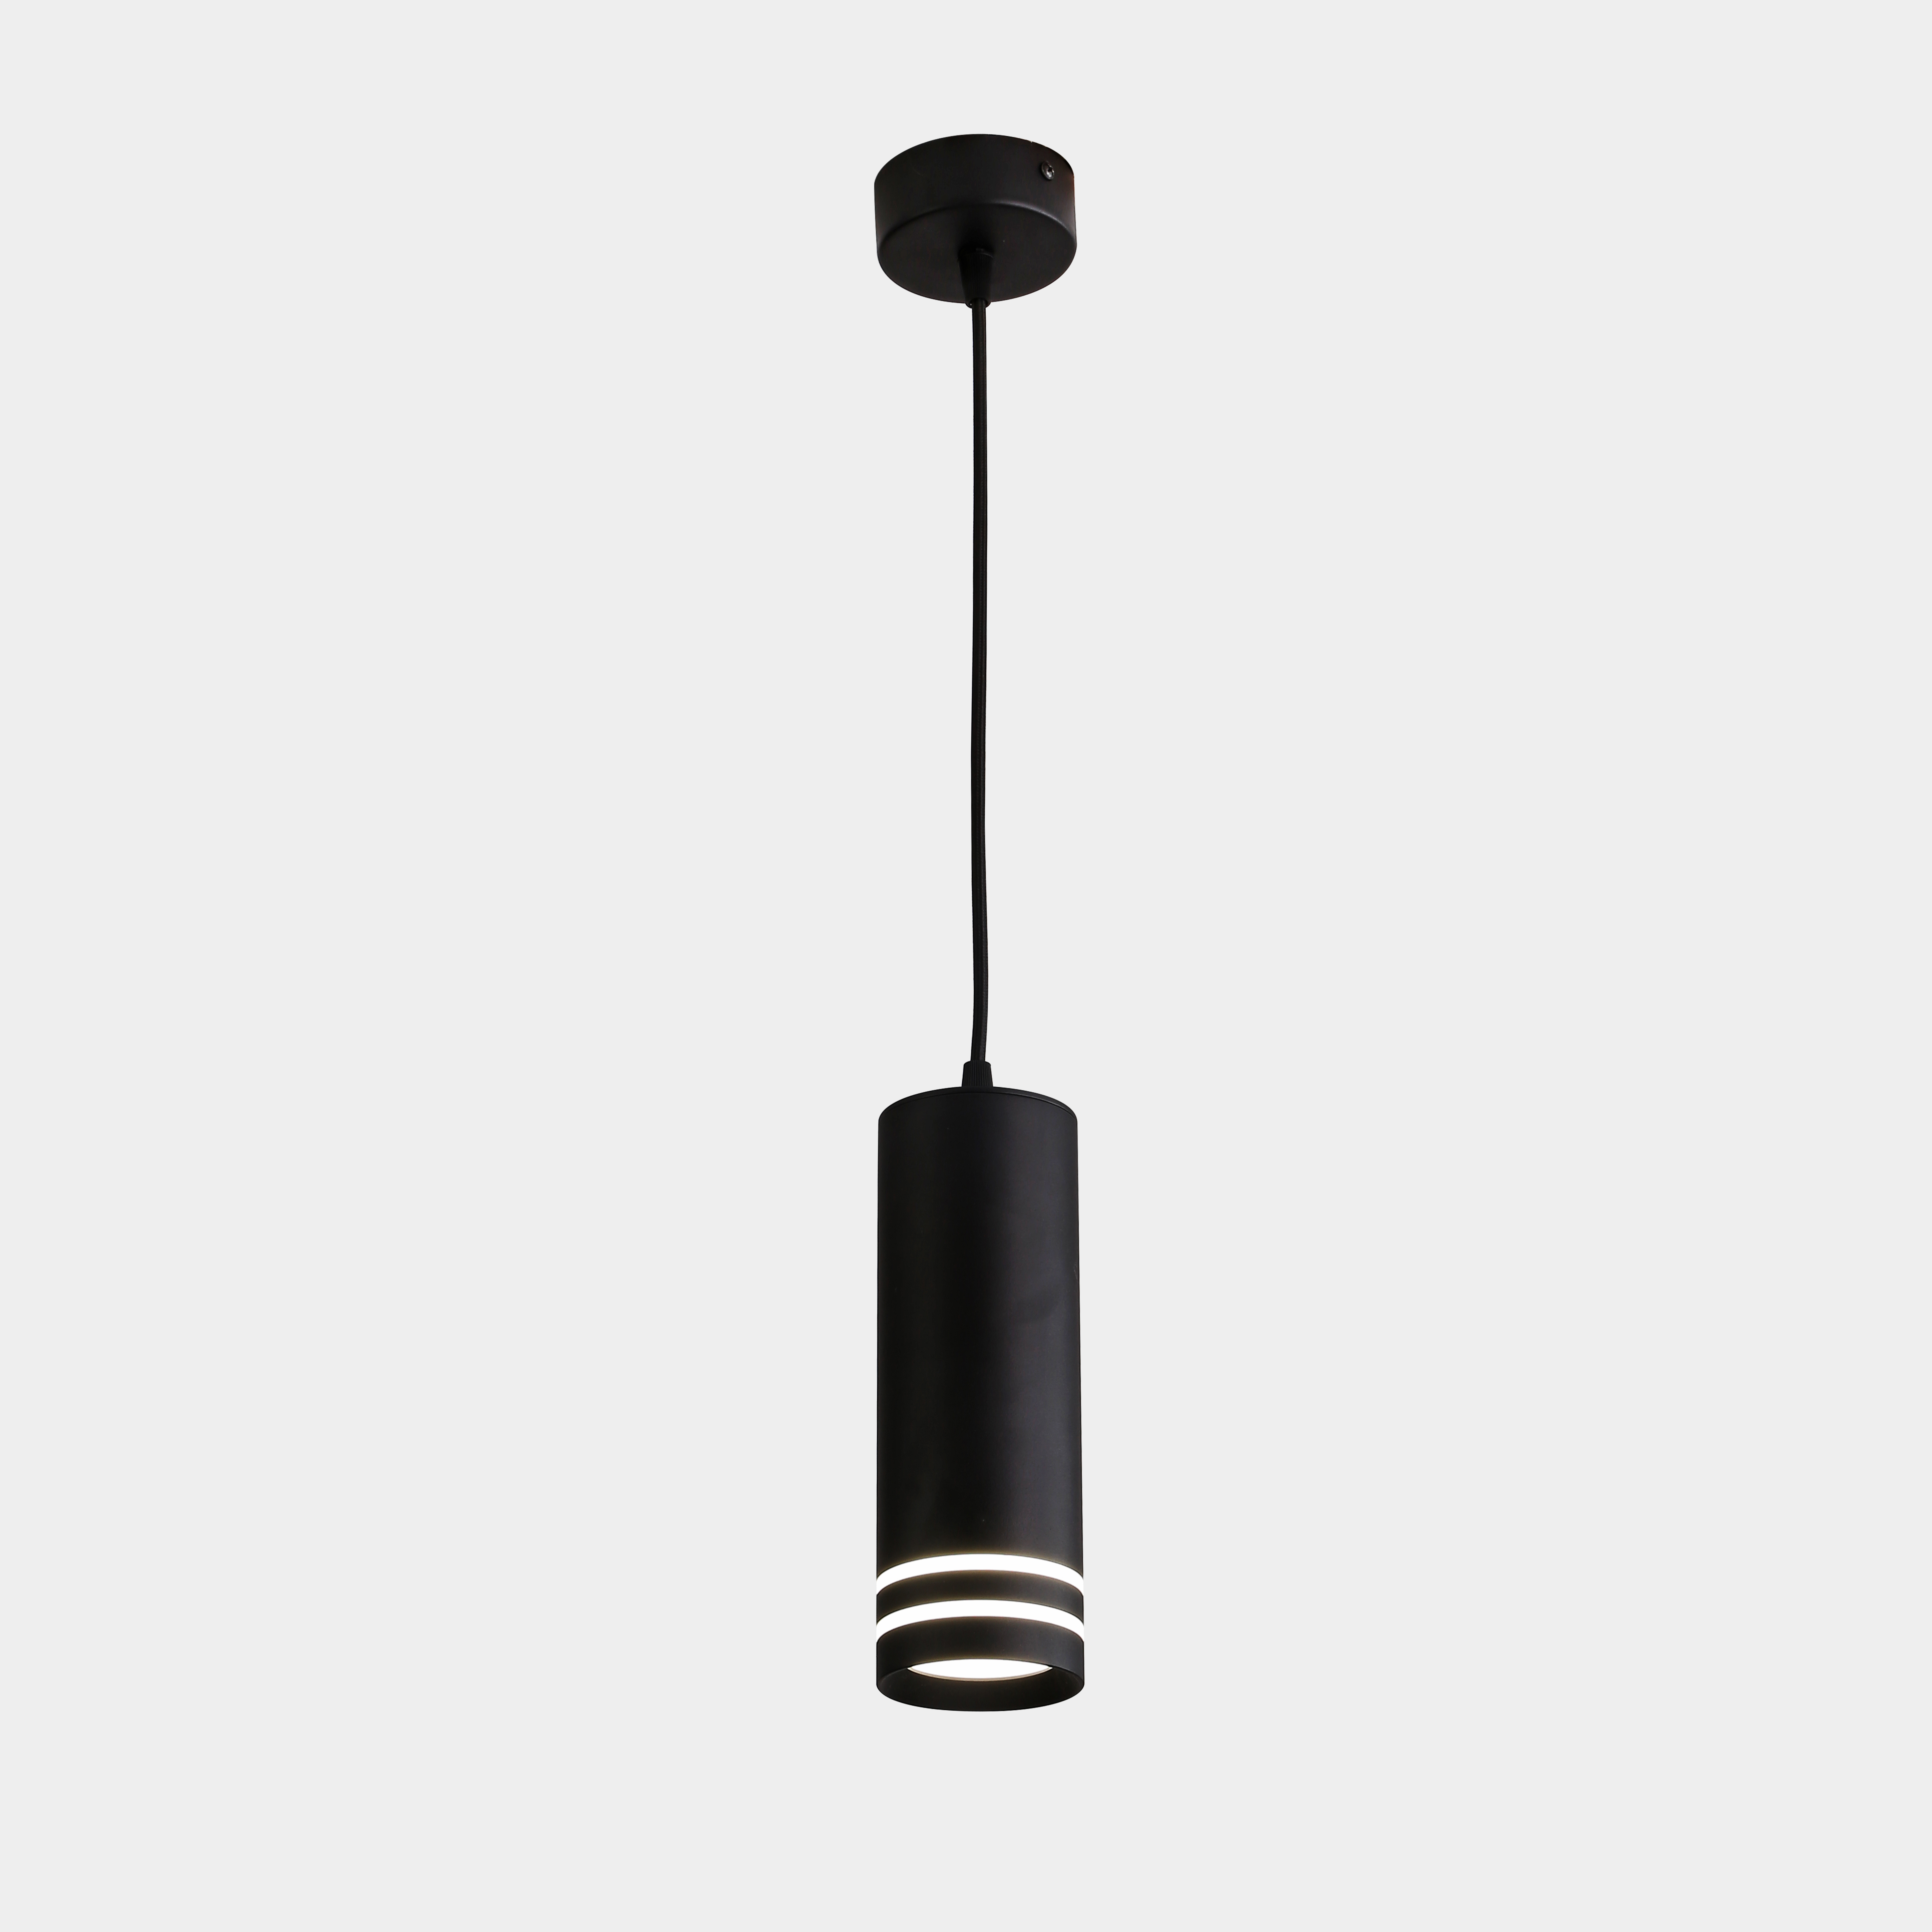 New Fashion Design for Ball Pendant Light - LED cylinder hanging light black Kitchen Island restaurant office hotel single chandelier Long Tube Length Adjustable Ceiling pendant light – MONKD